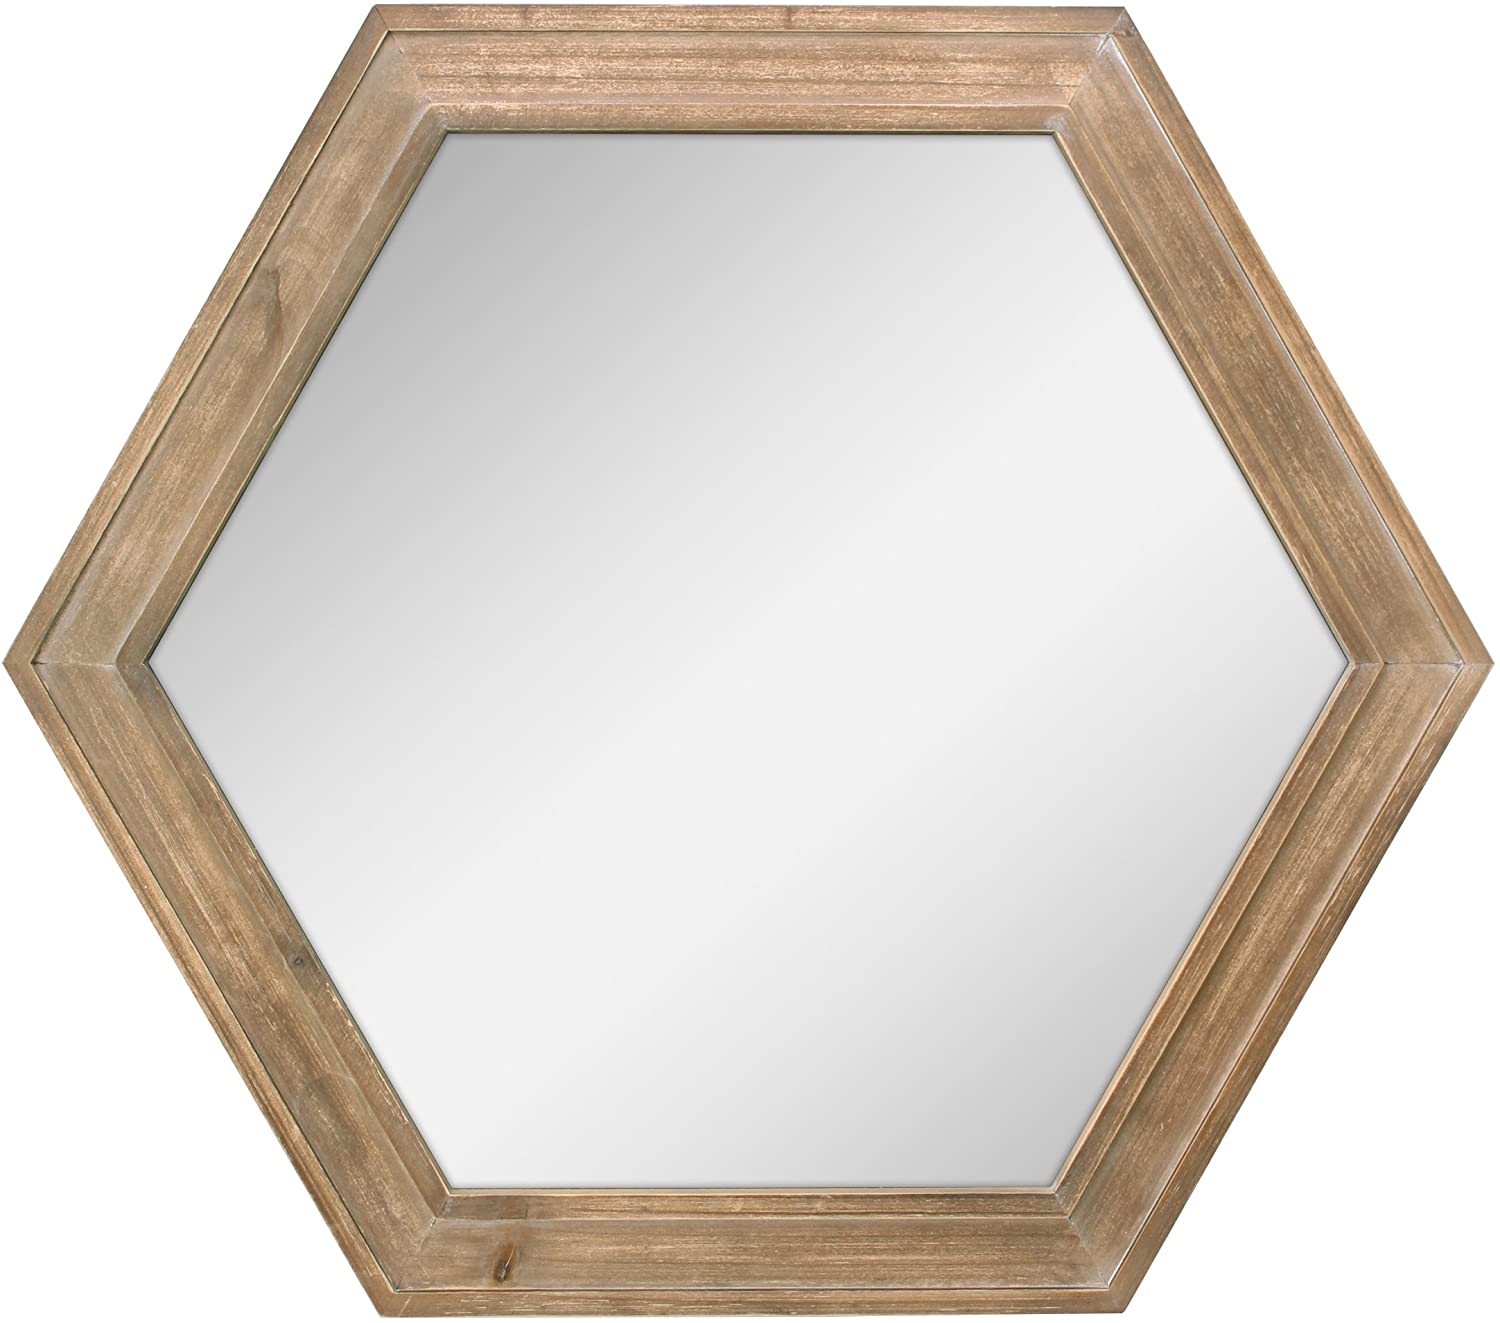 Stonebriar Natural Wood Hexagon Wall Mirror, 24-Inch